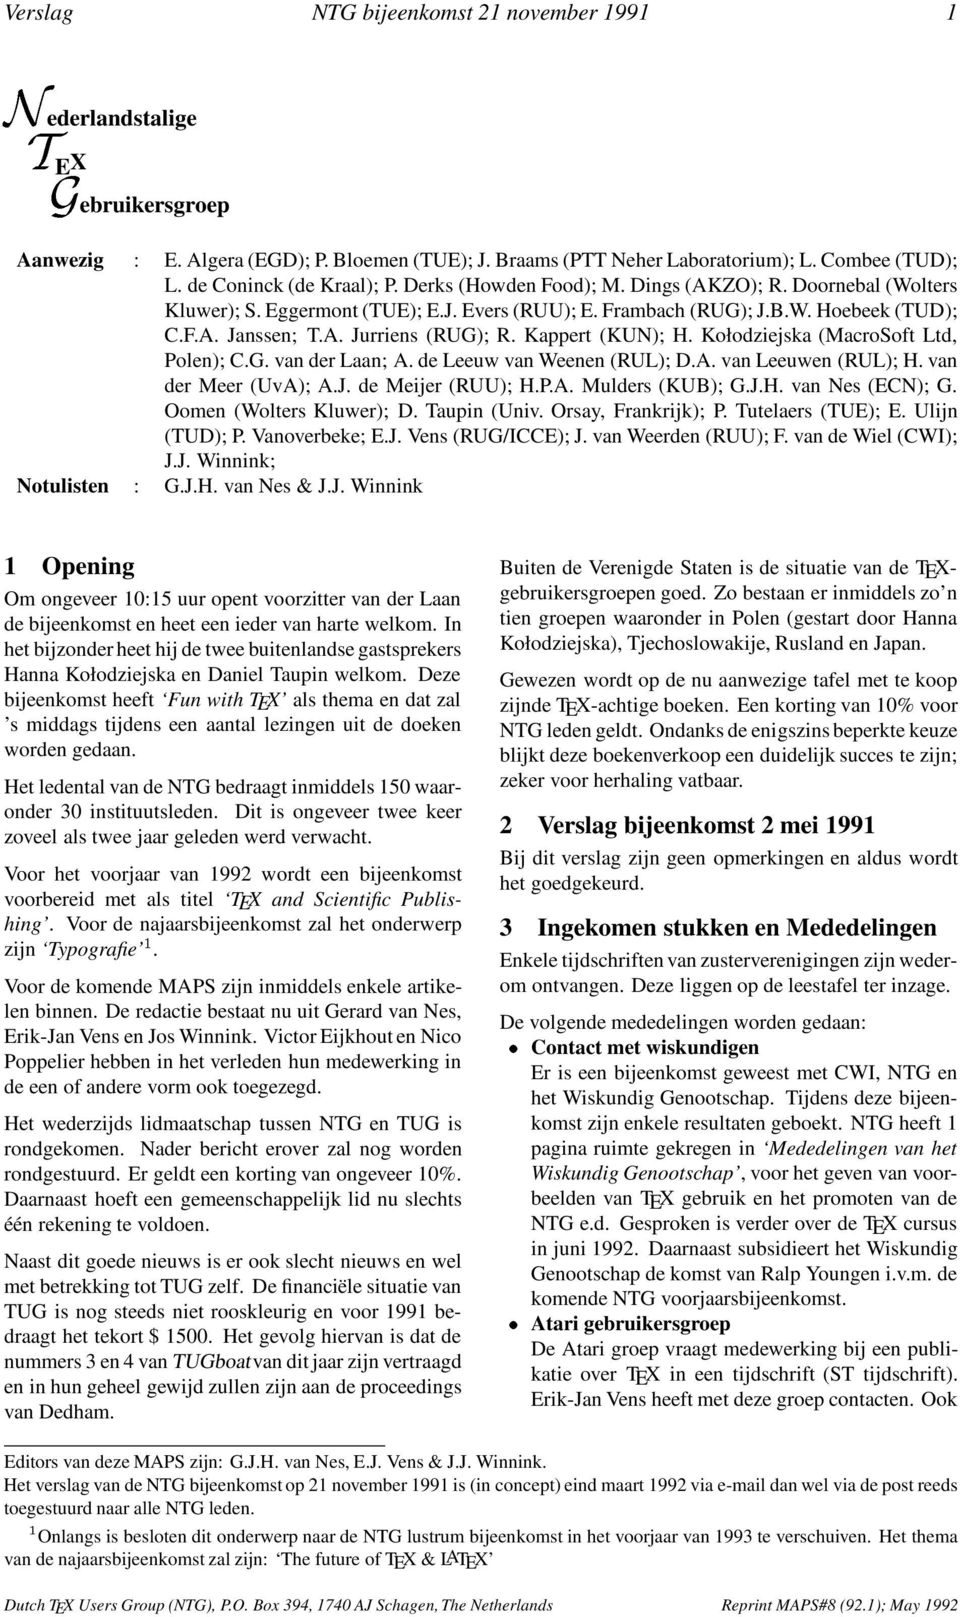 Kappert (KUN); H. Kołodziejska (MacroSoft Ltd, Polen); C.G. van der Laan; A. de Leeuw van Weenen (RUL); D.A. van Leeuwen (RUL); H. van der Meer (UvA); A.J. de Meijer (RUU); H.P.A. Mulders (KUB); G.J.H. van Nes (ECN); G.